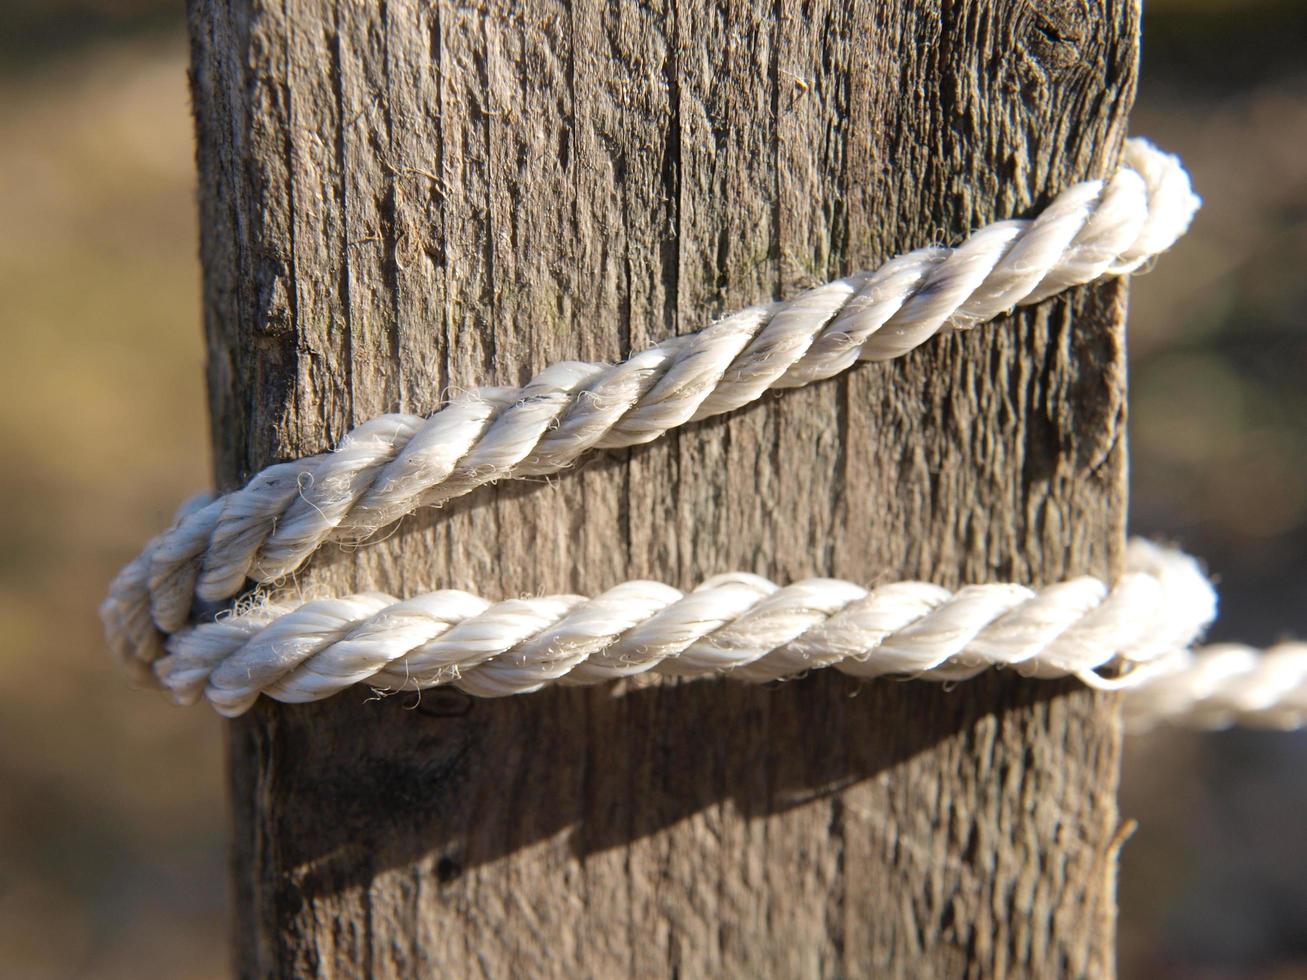 White rope tied around some wood detail photo